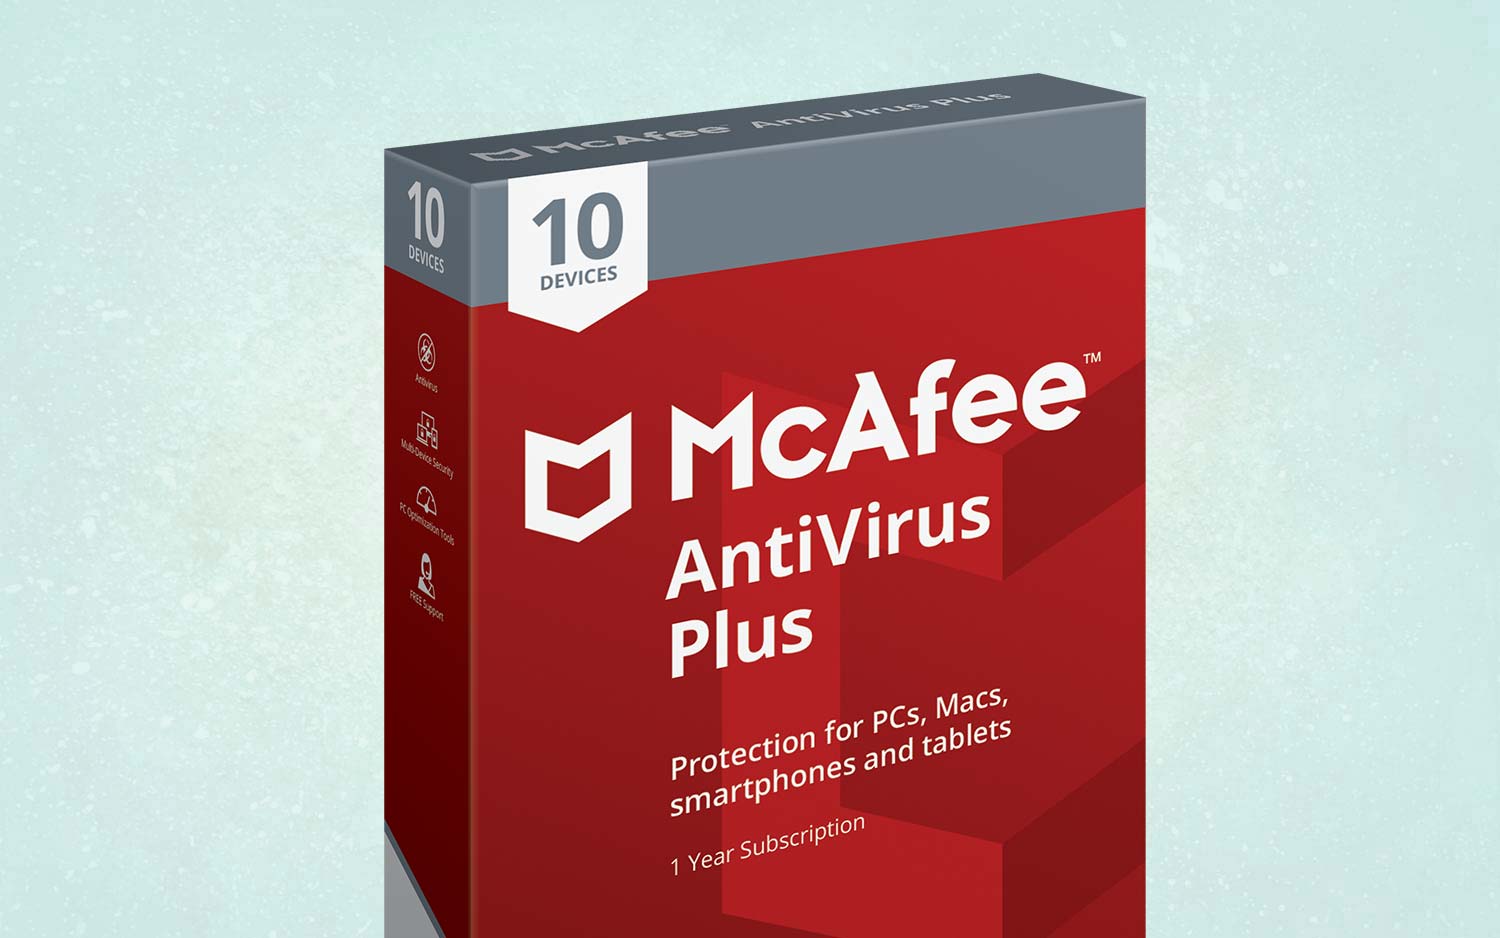 Best Mac antivirus: McAfee Antivirus Plus